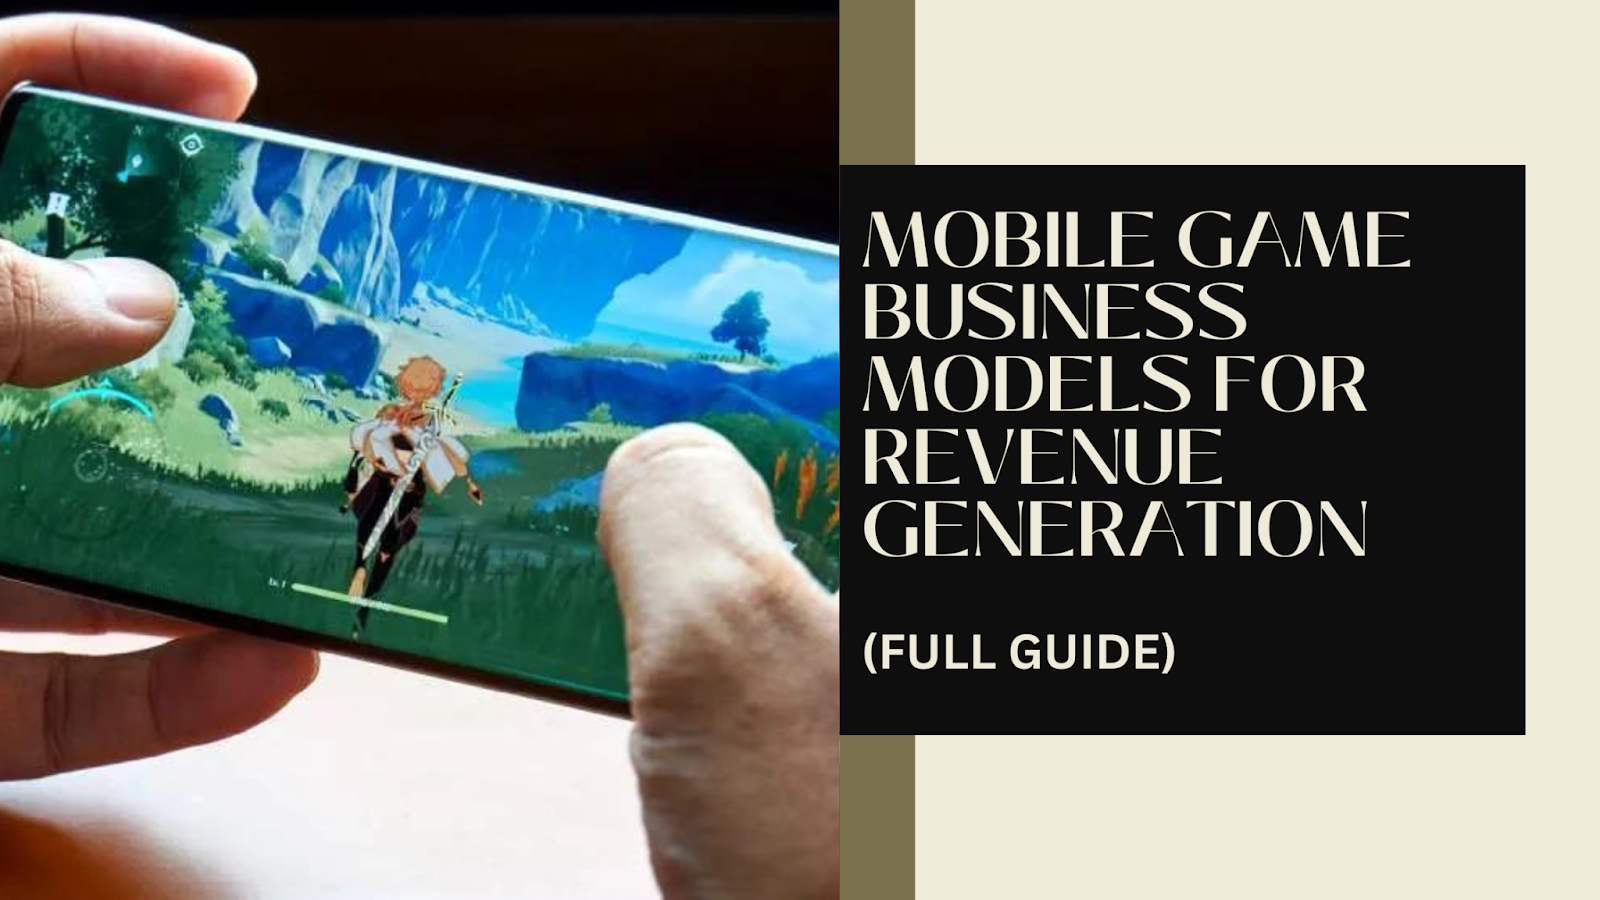 Mobile Game Business Models for Revenue Generation